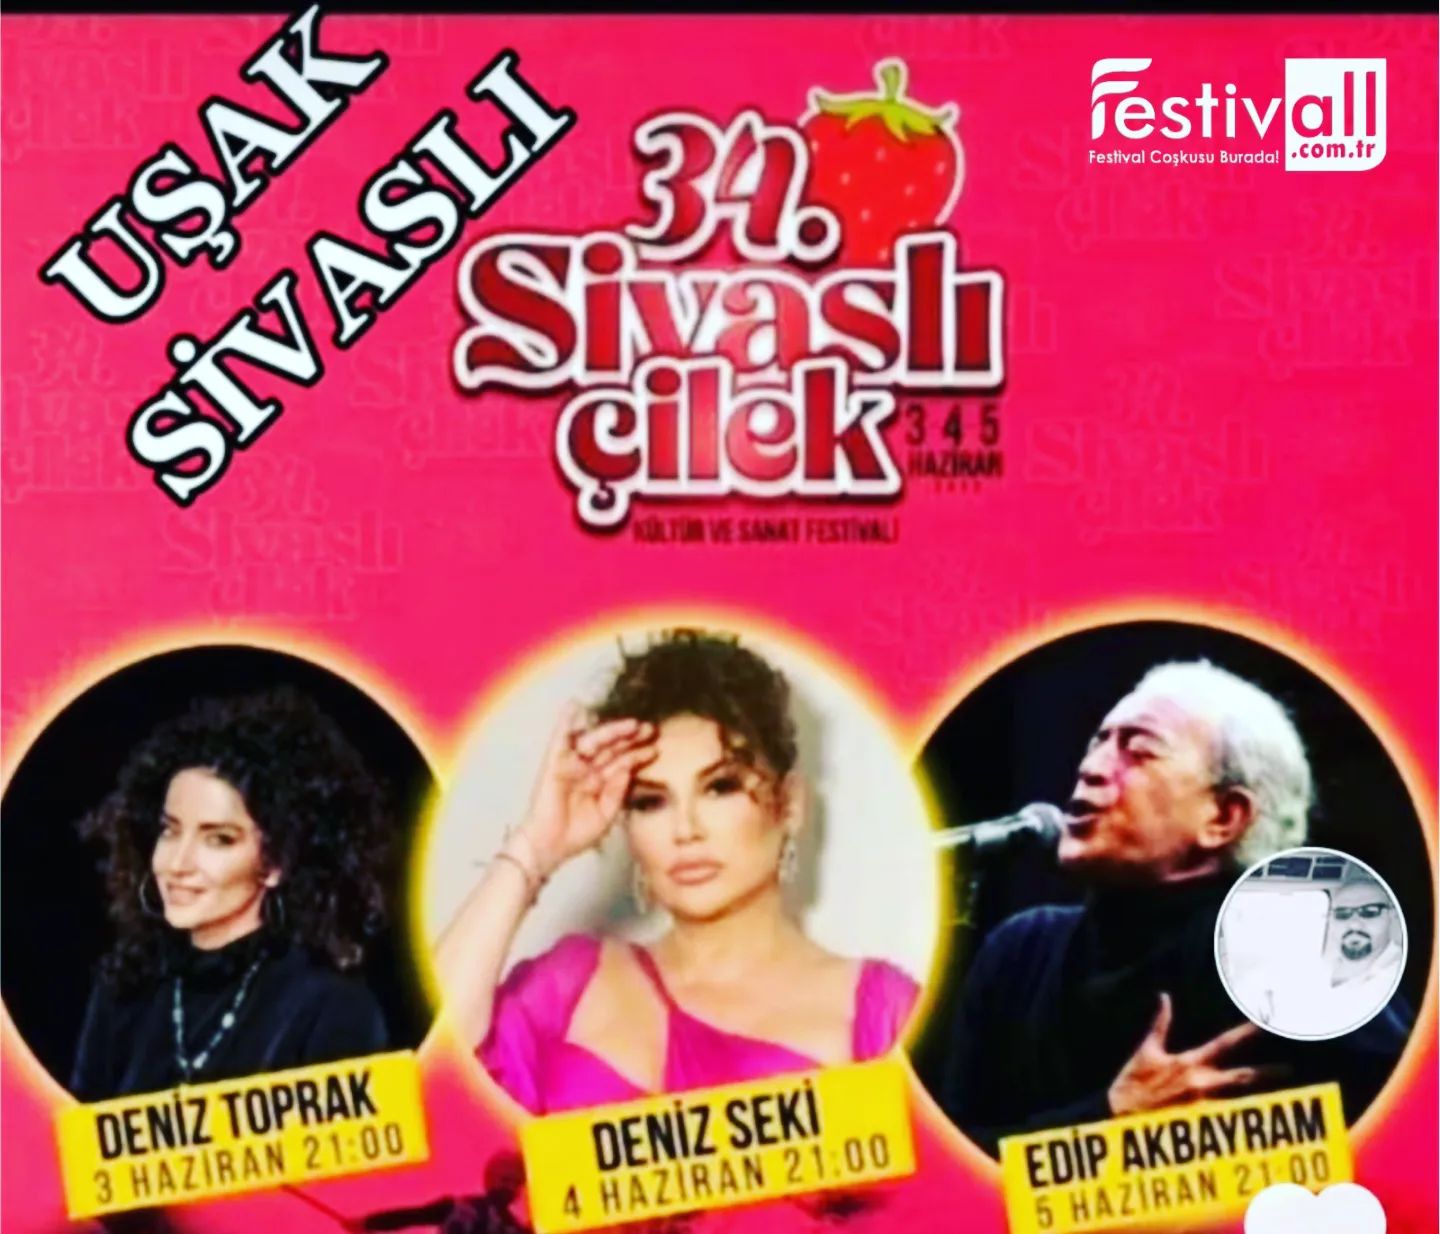 sivasli-cilek-kultur-ve-sanat-festivali-834